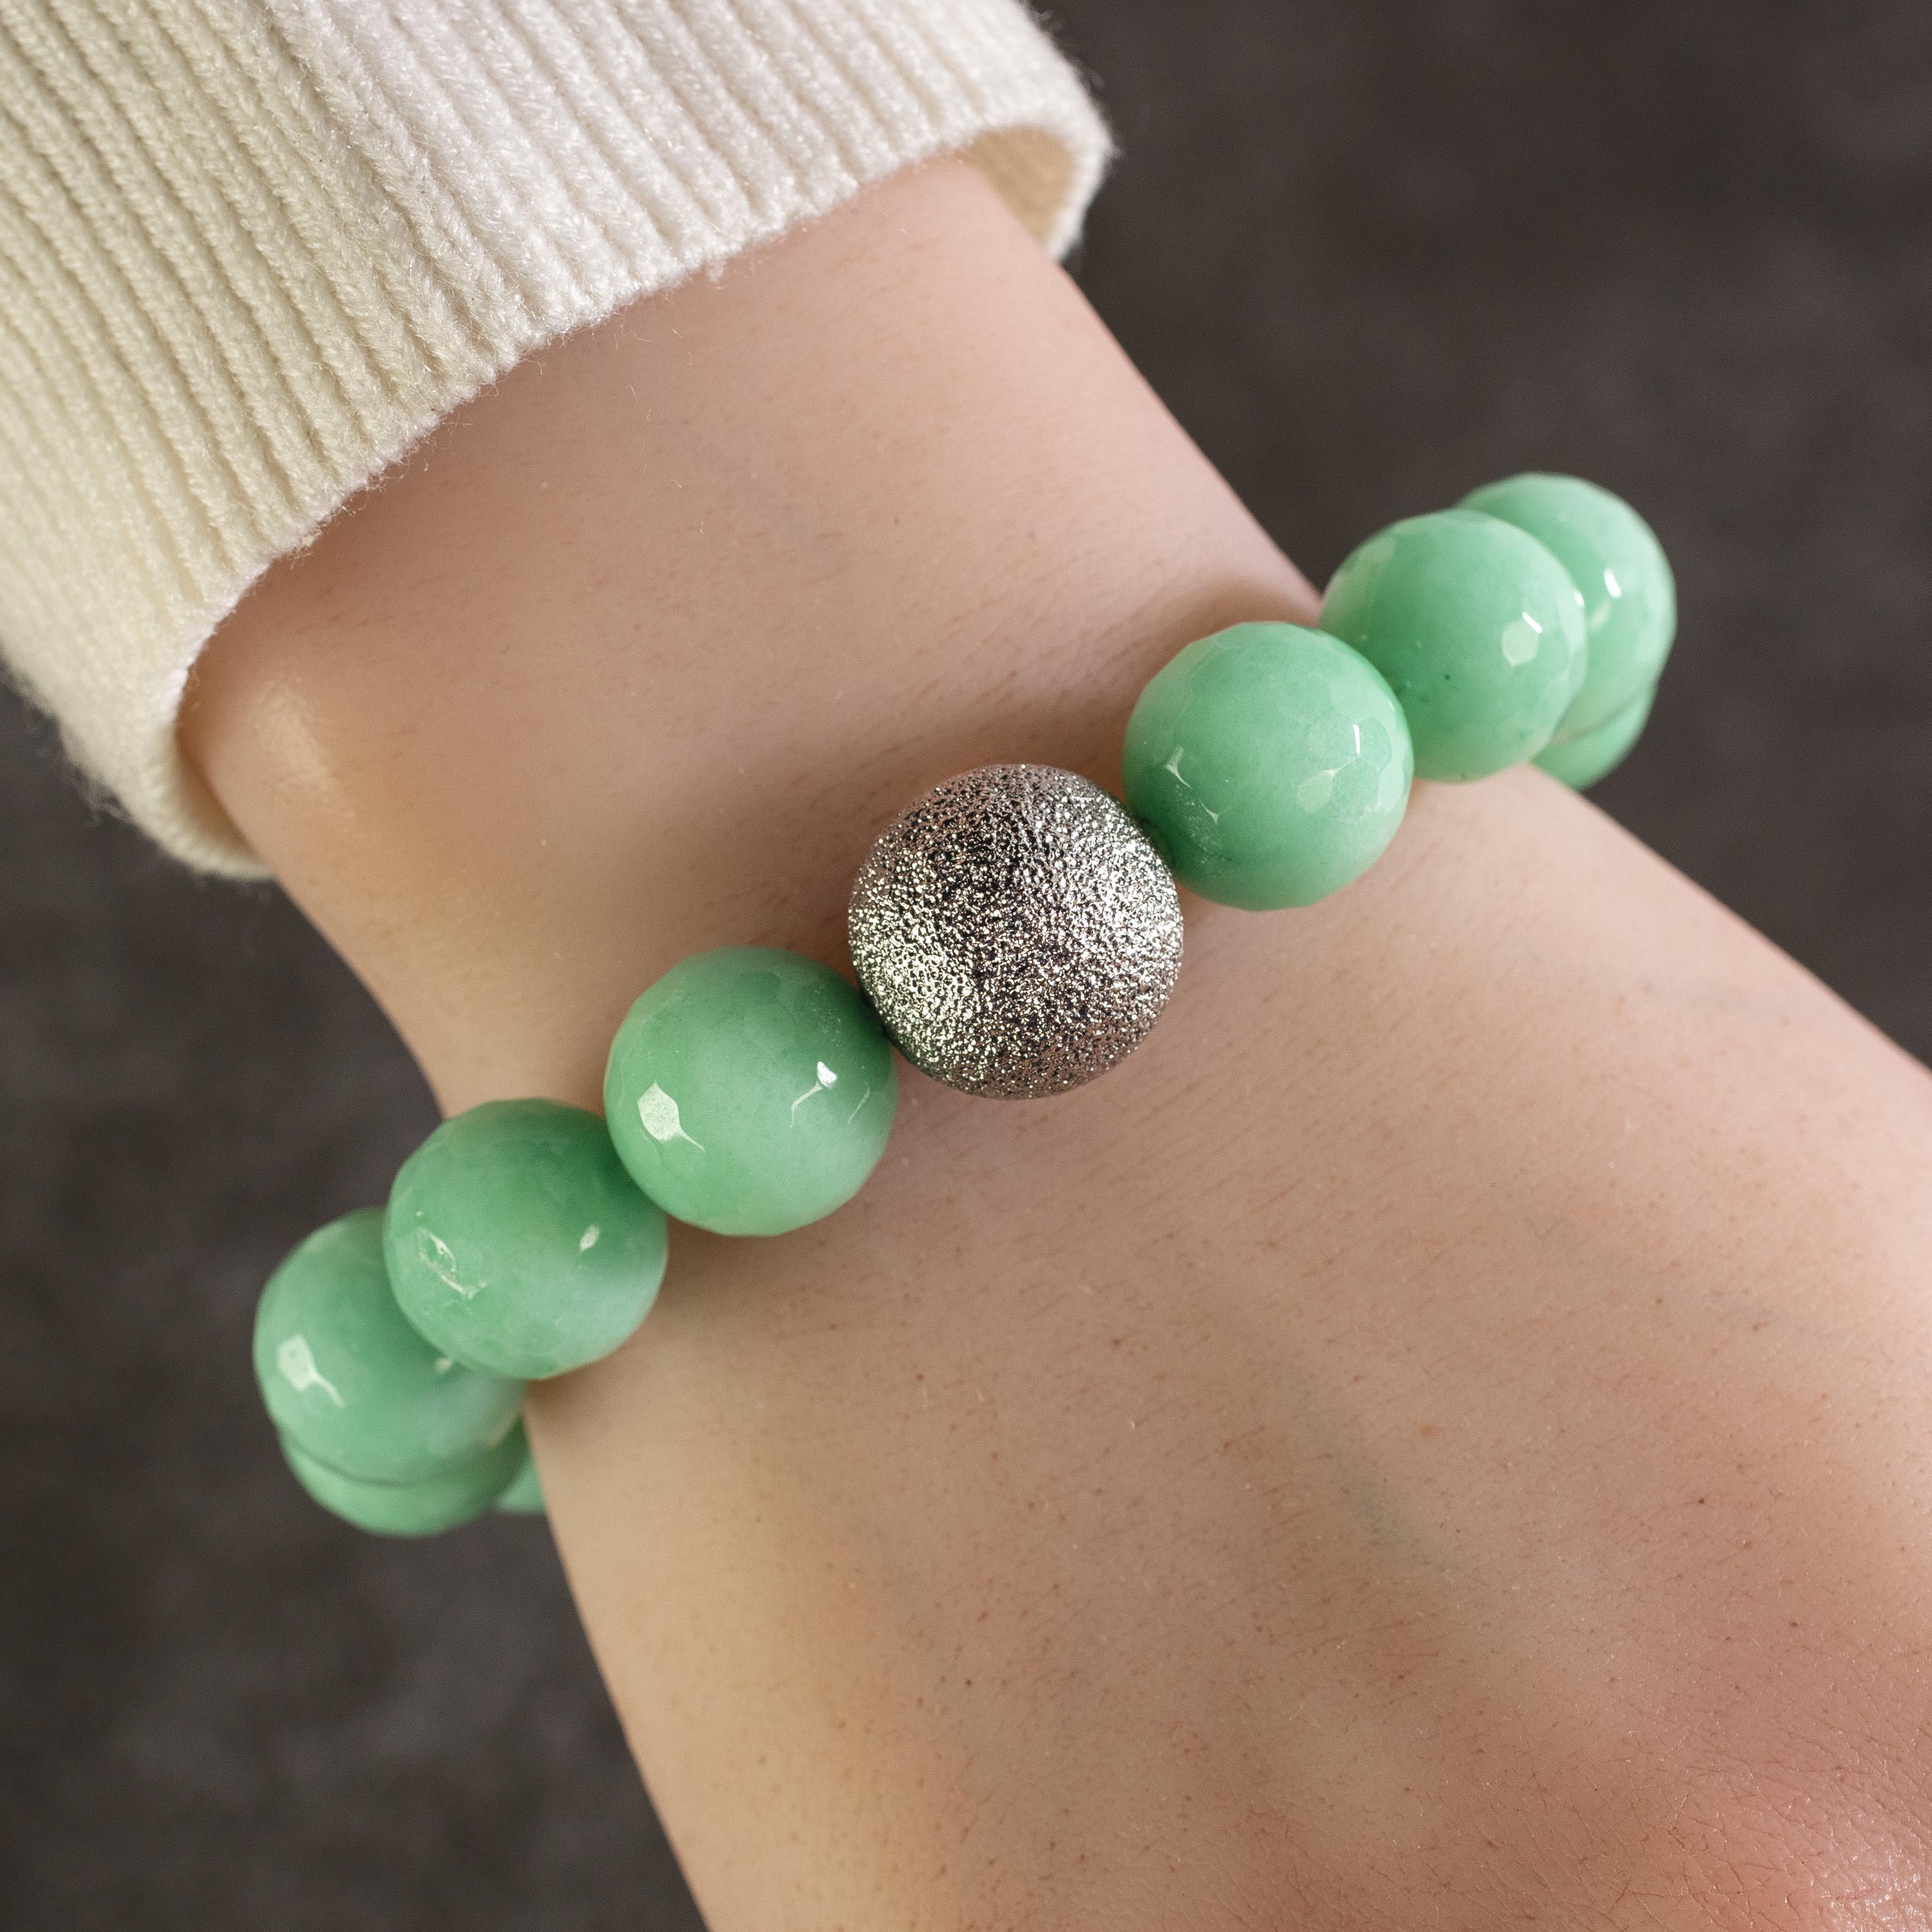 Kalifano Gemstone Bracelets Faceted Mint Color Enhanced Jade with Silver Accent Bead Gemstone Elastic Bracelet RED-BGP-037